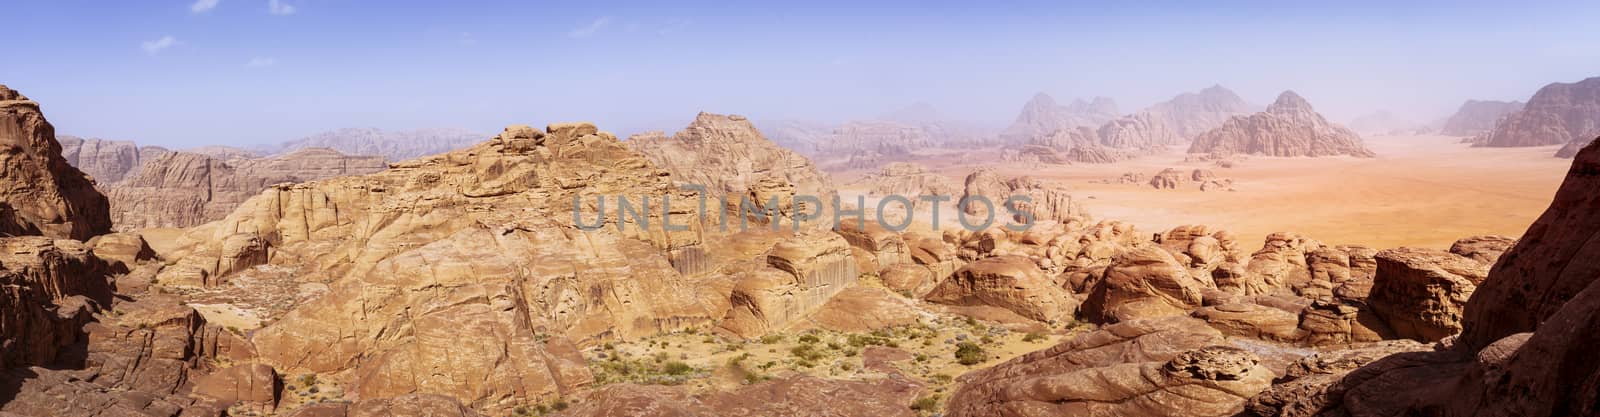 panorama of the Wadi Rum desert in Jordan as seen from Burdah Rock Mountain. by kb79